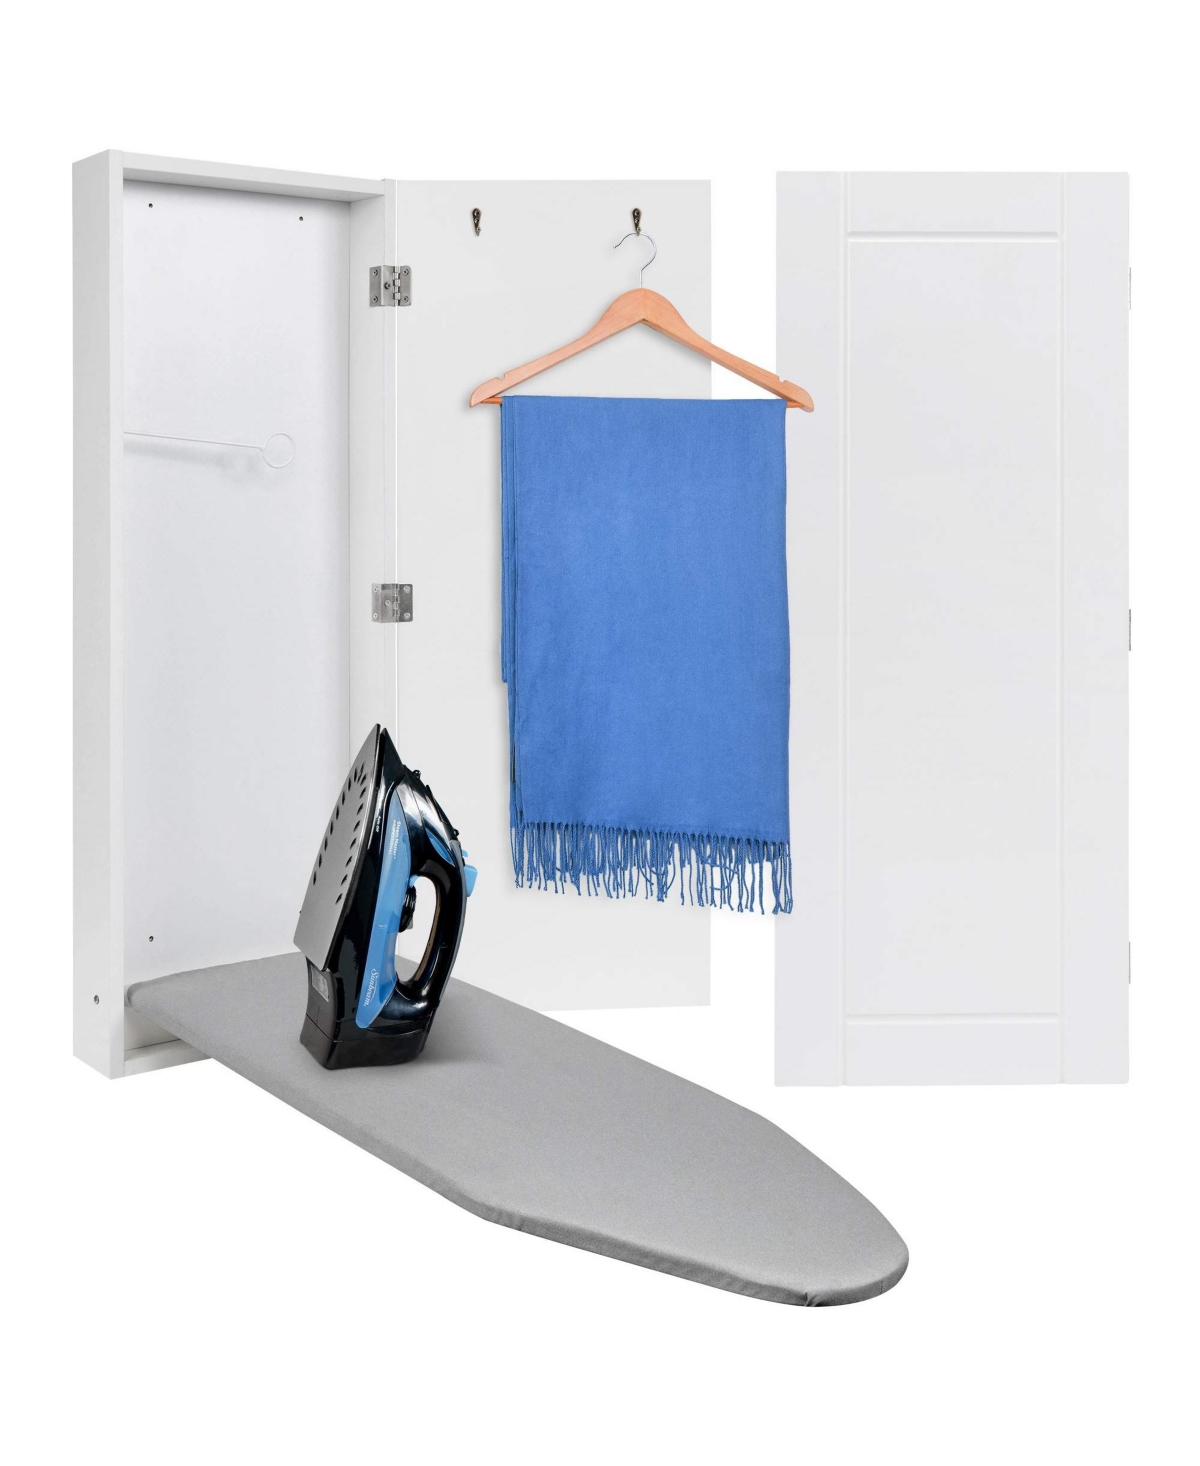 Ironing Board, Wall Mounted Ironing Board Holder & Iron Board - White